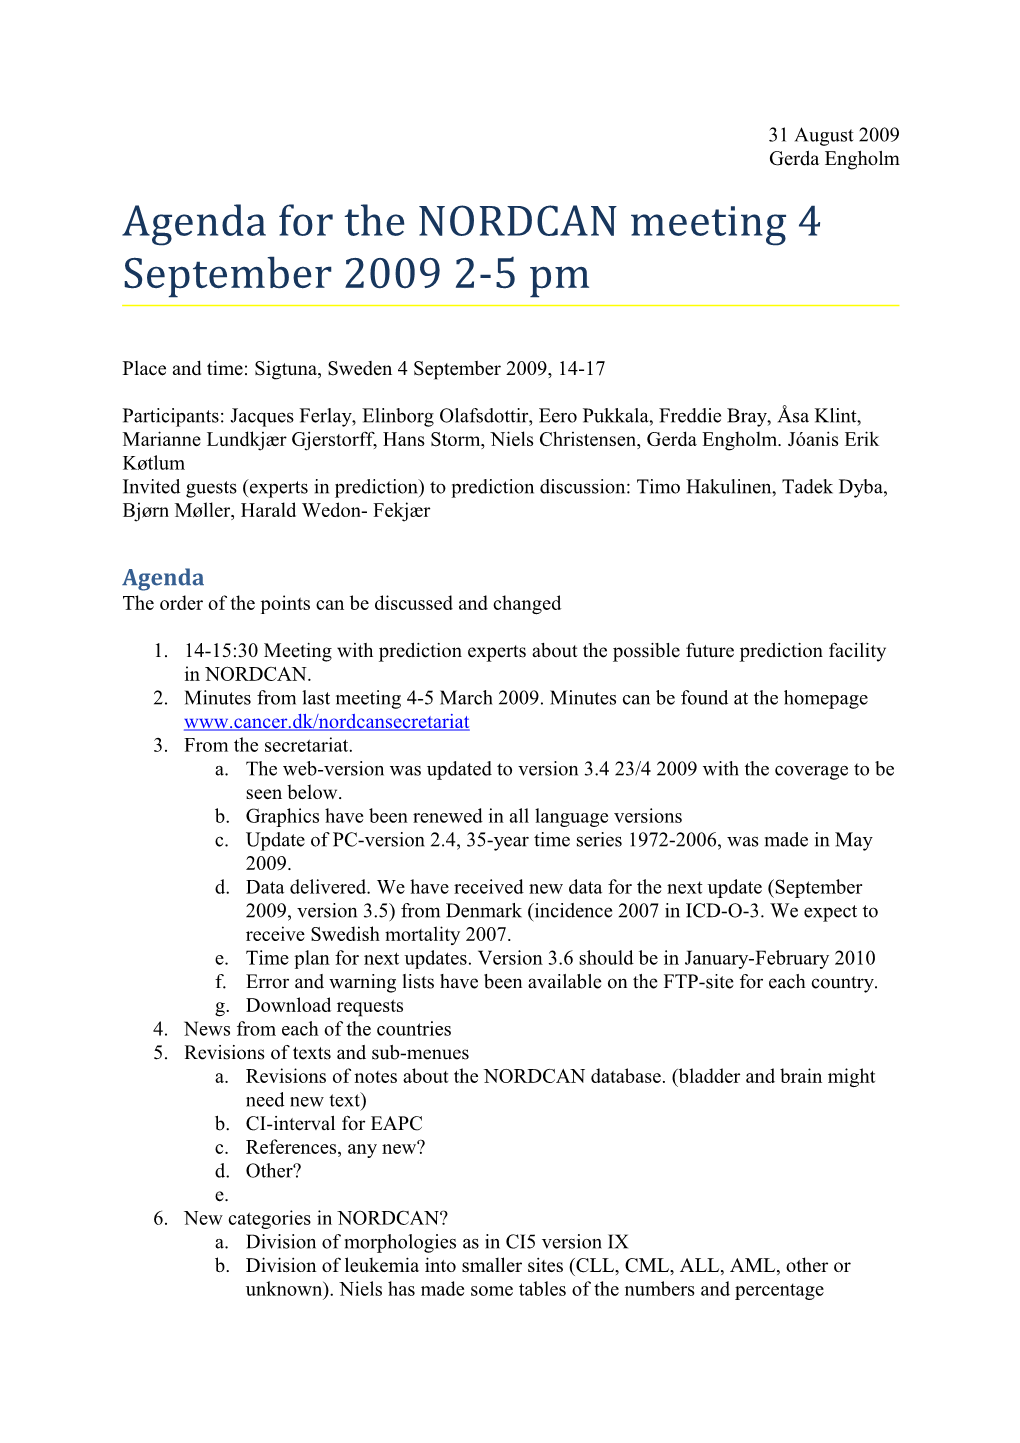 Agenda for the NORDCAN Meeting 4 September 2009 2-5 Pm